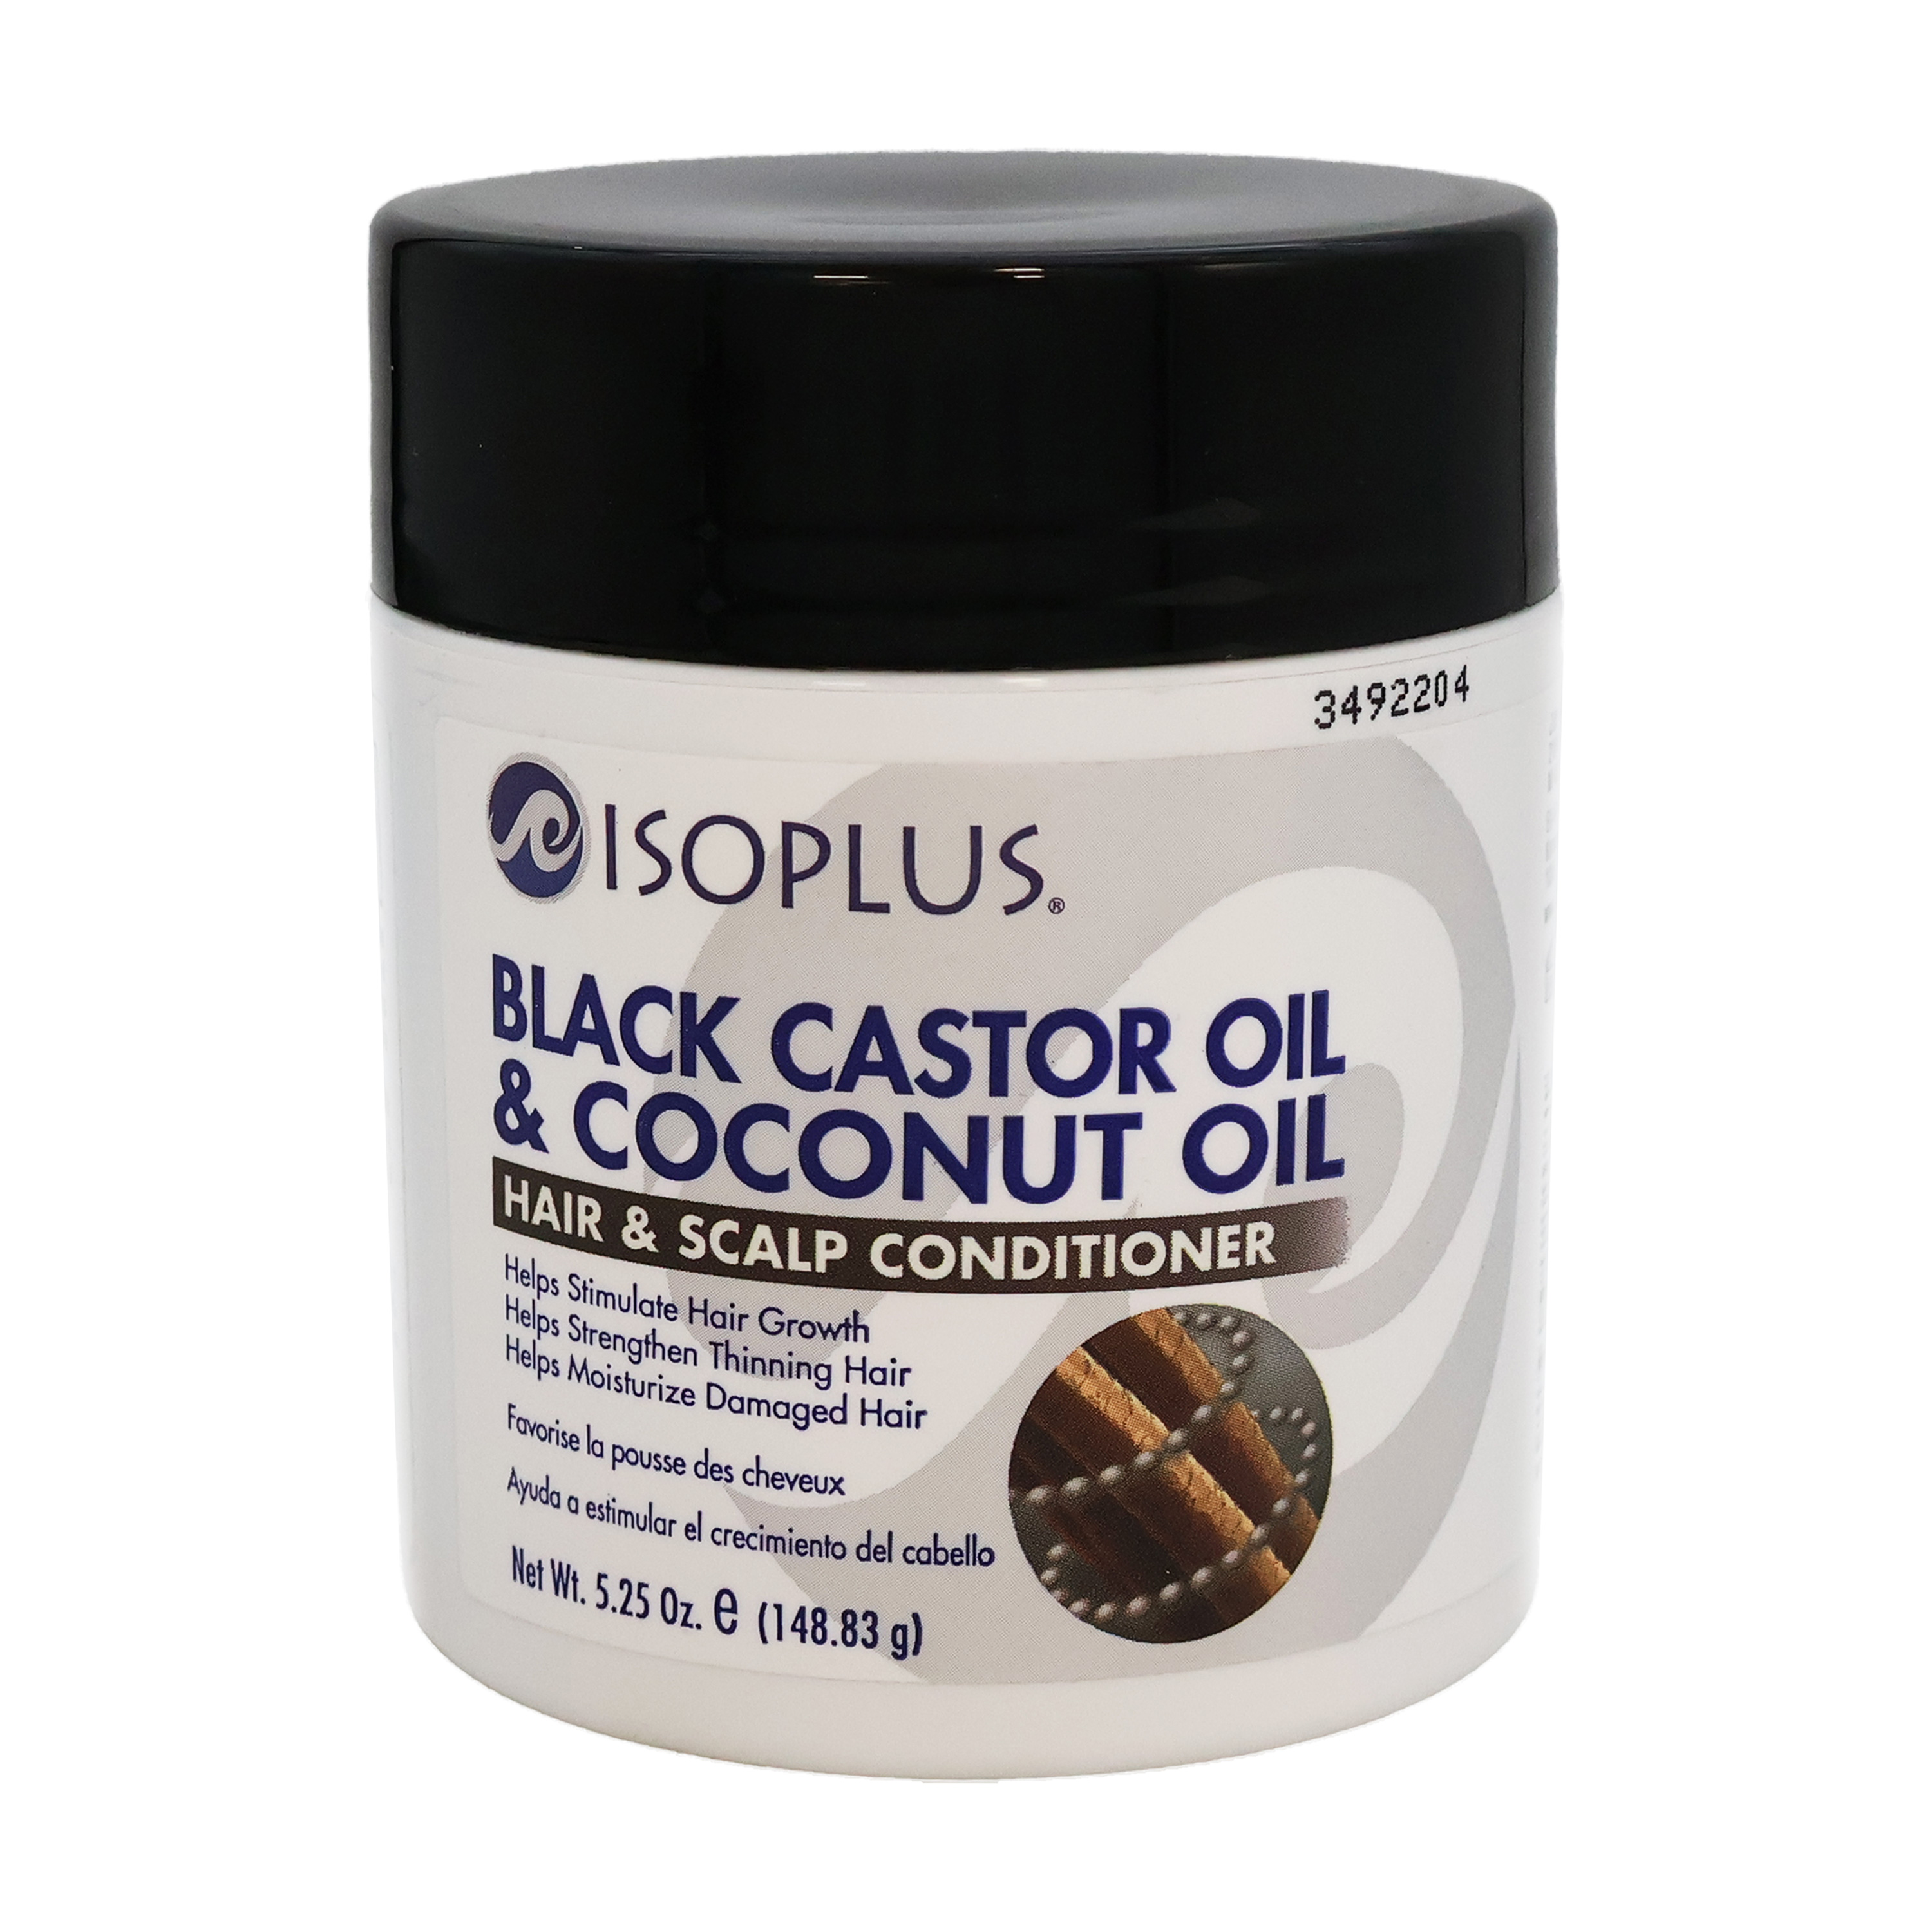 Isoplus Black Castor Oil & Coconut Oil Hair & Scalp Conditioner 5.25 Oz.,Pack of 3 - image 1 of 3